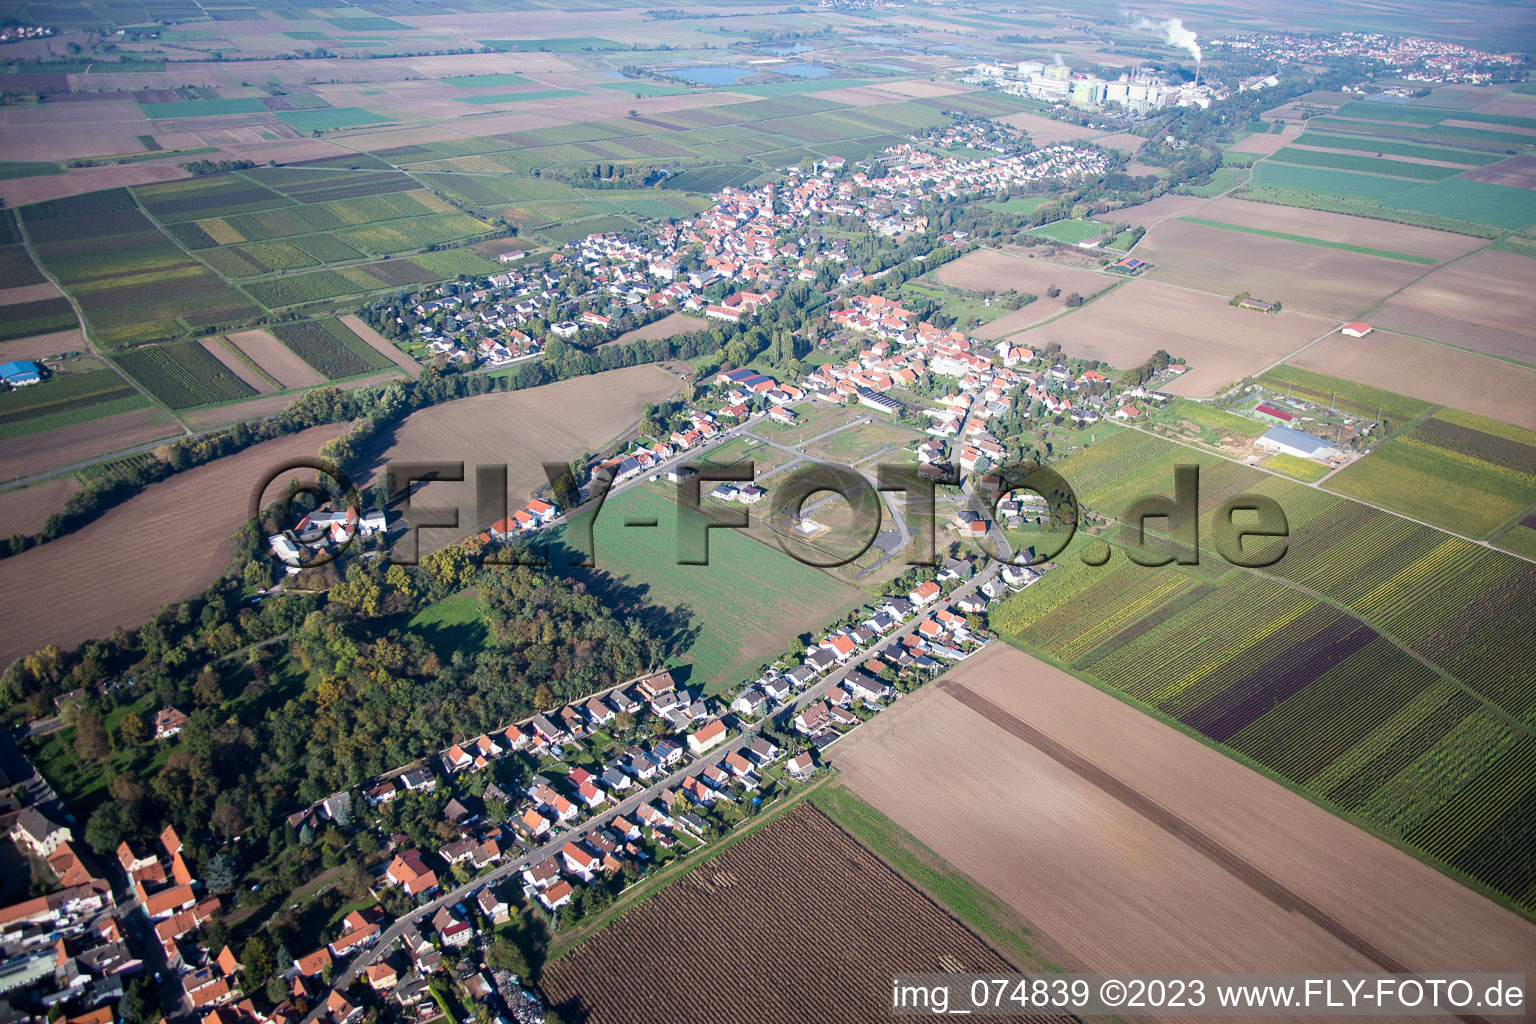 Aerial view of Heidesheim in the state Rhineland-Palatinate, Germany